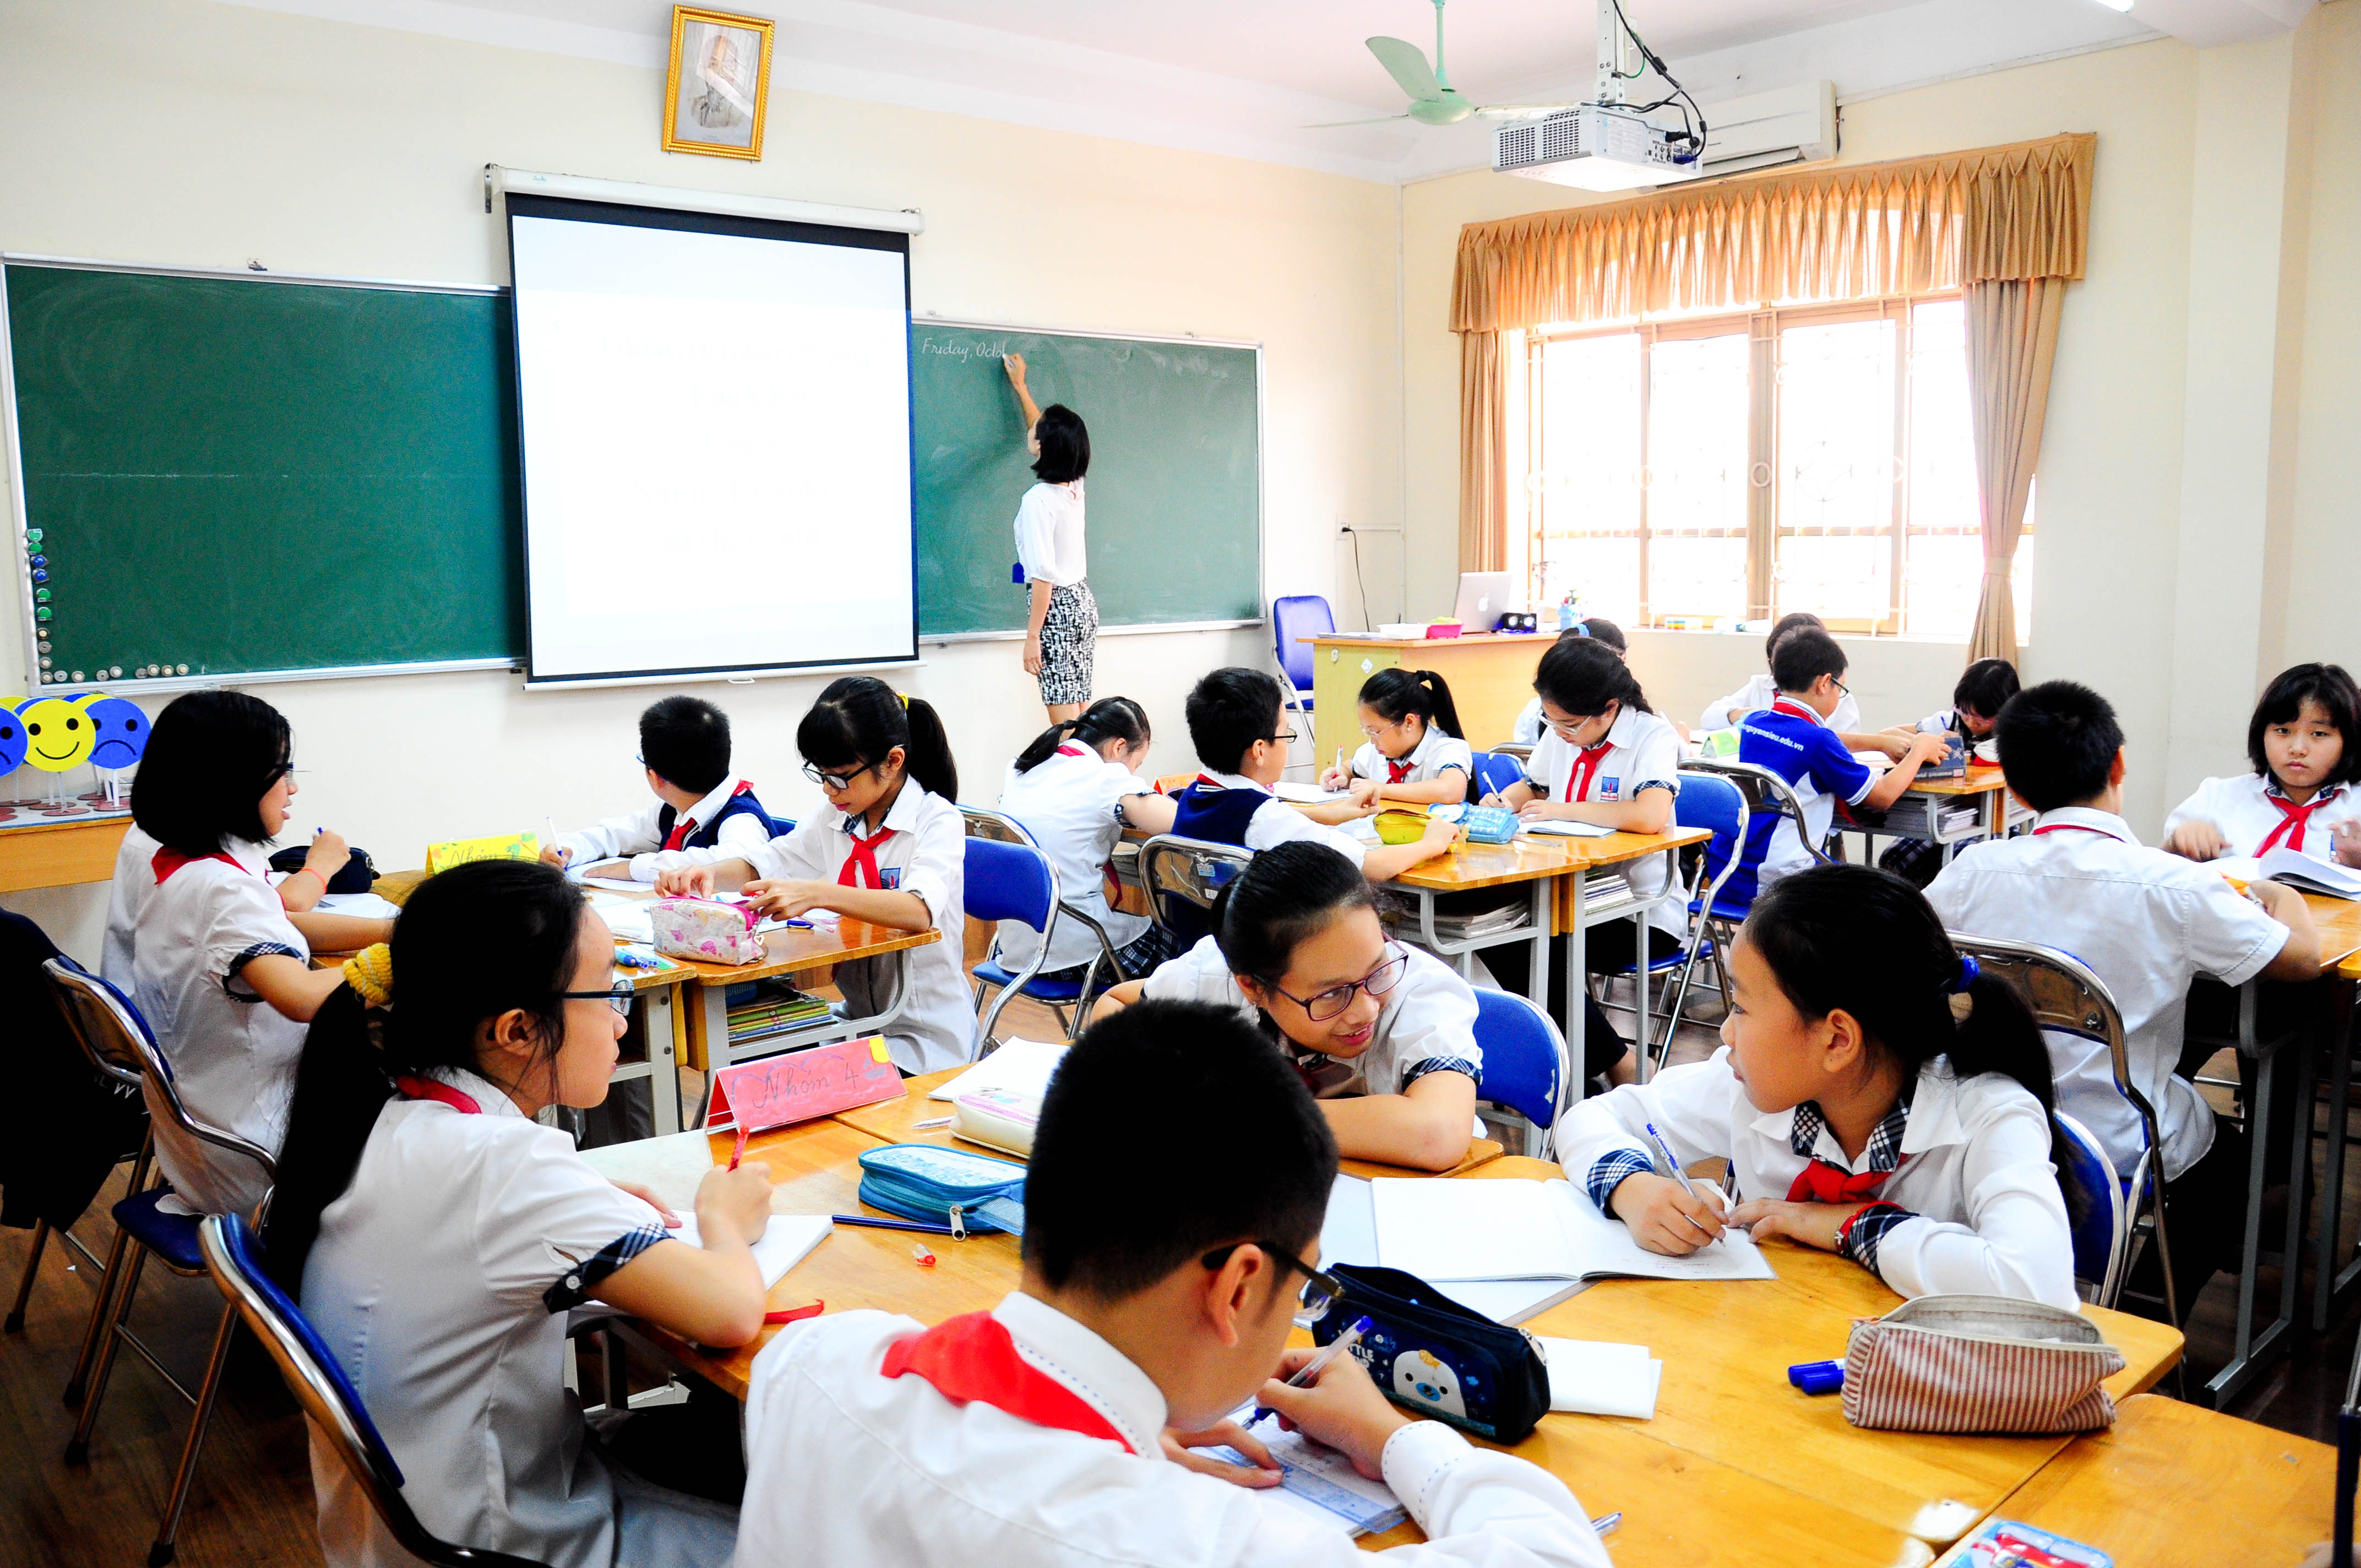 Thai Watana Panich Teachers Education Field Trip” ครั้งที่ 3 ณ โรงเรียน Nguyen Sieu School